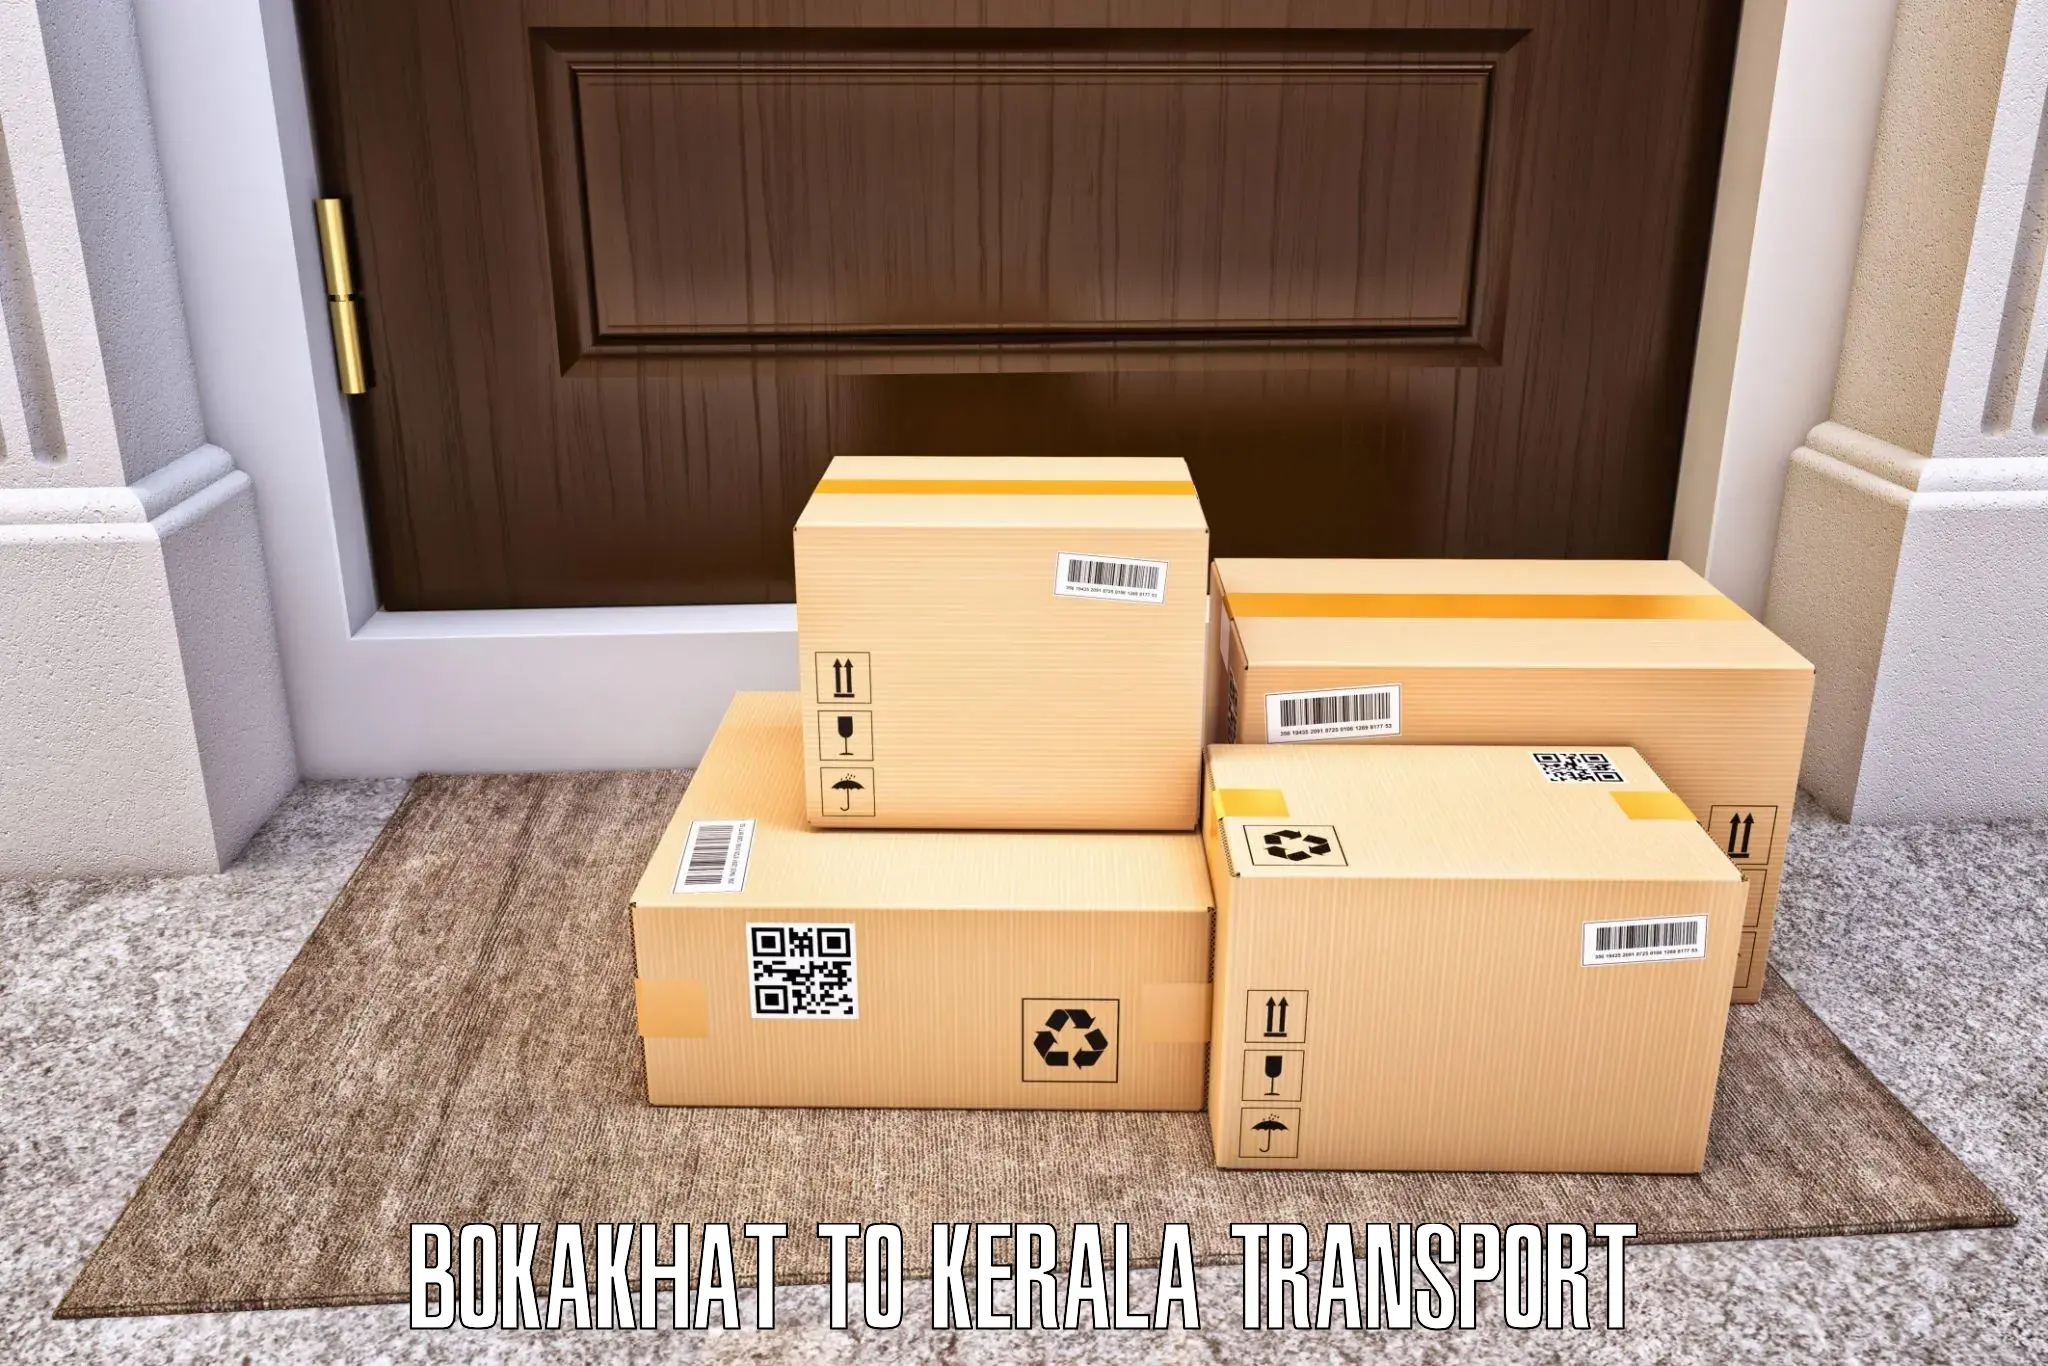 Express transport services Bokakhat to Kochi